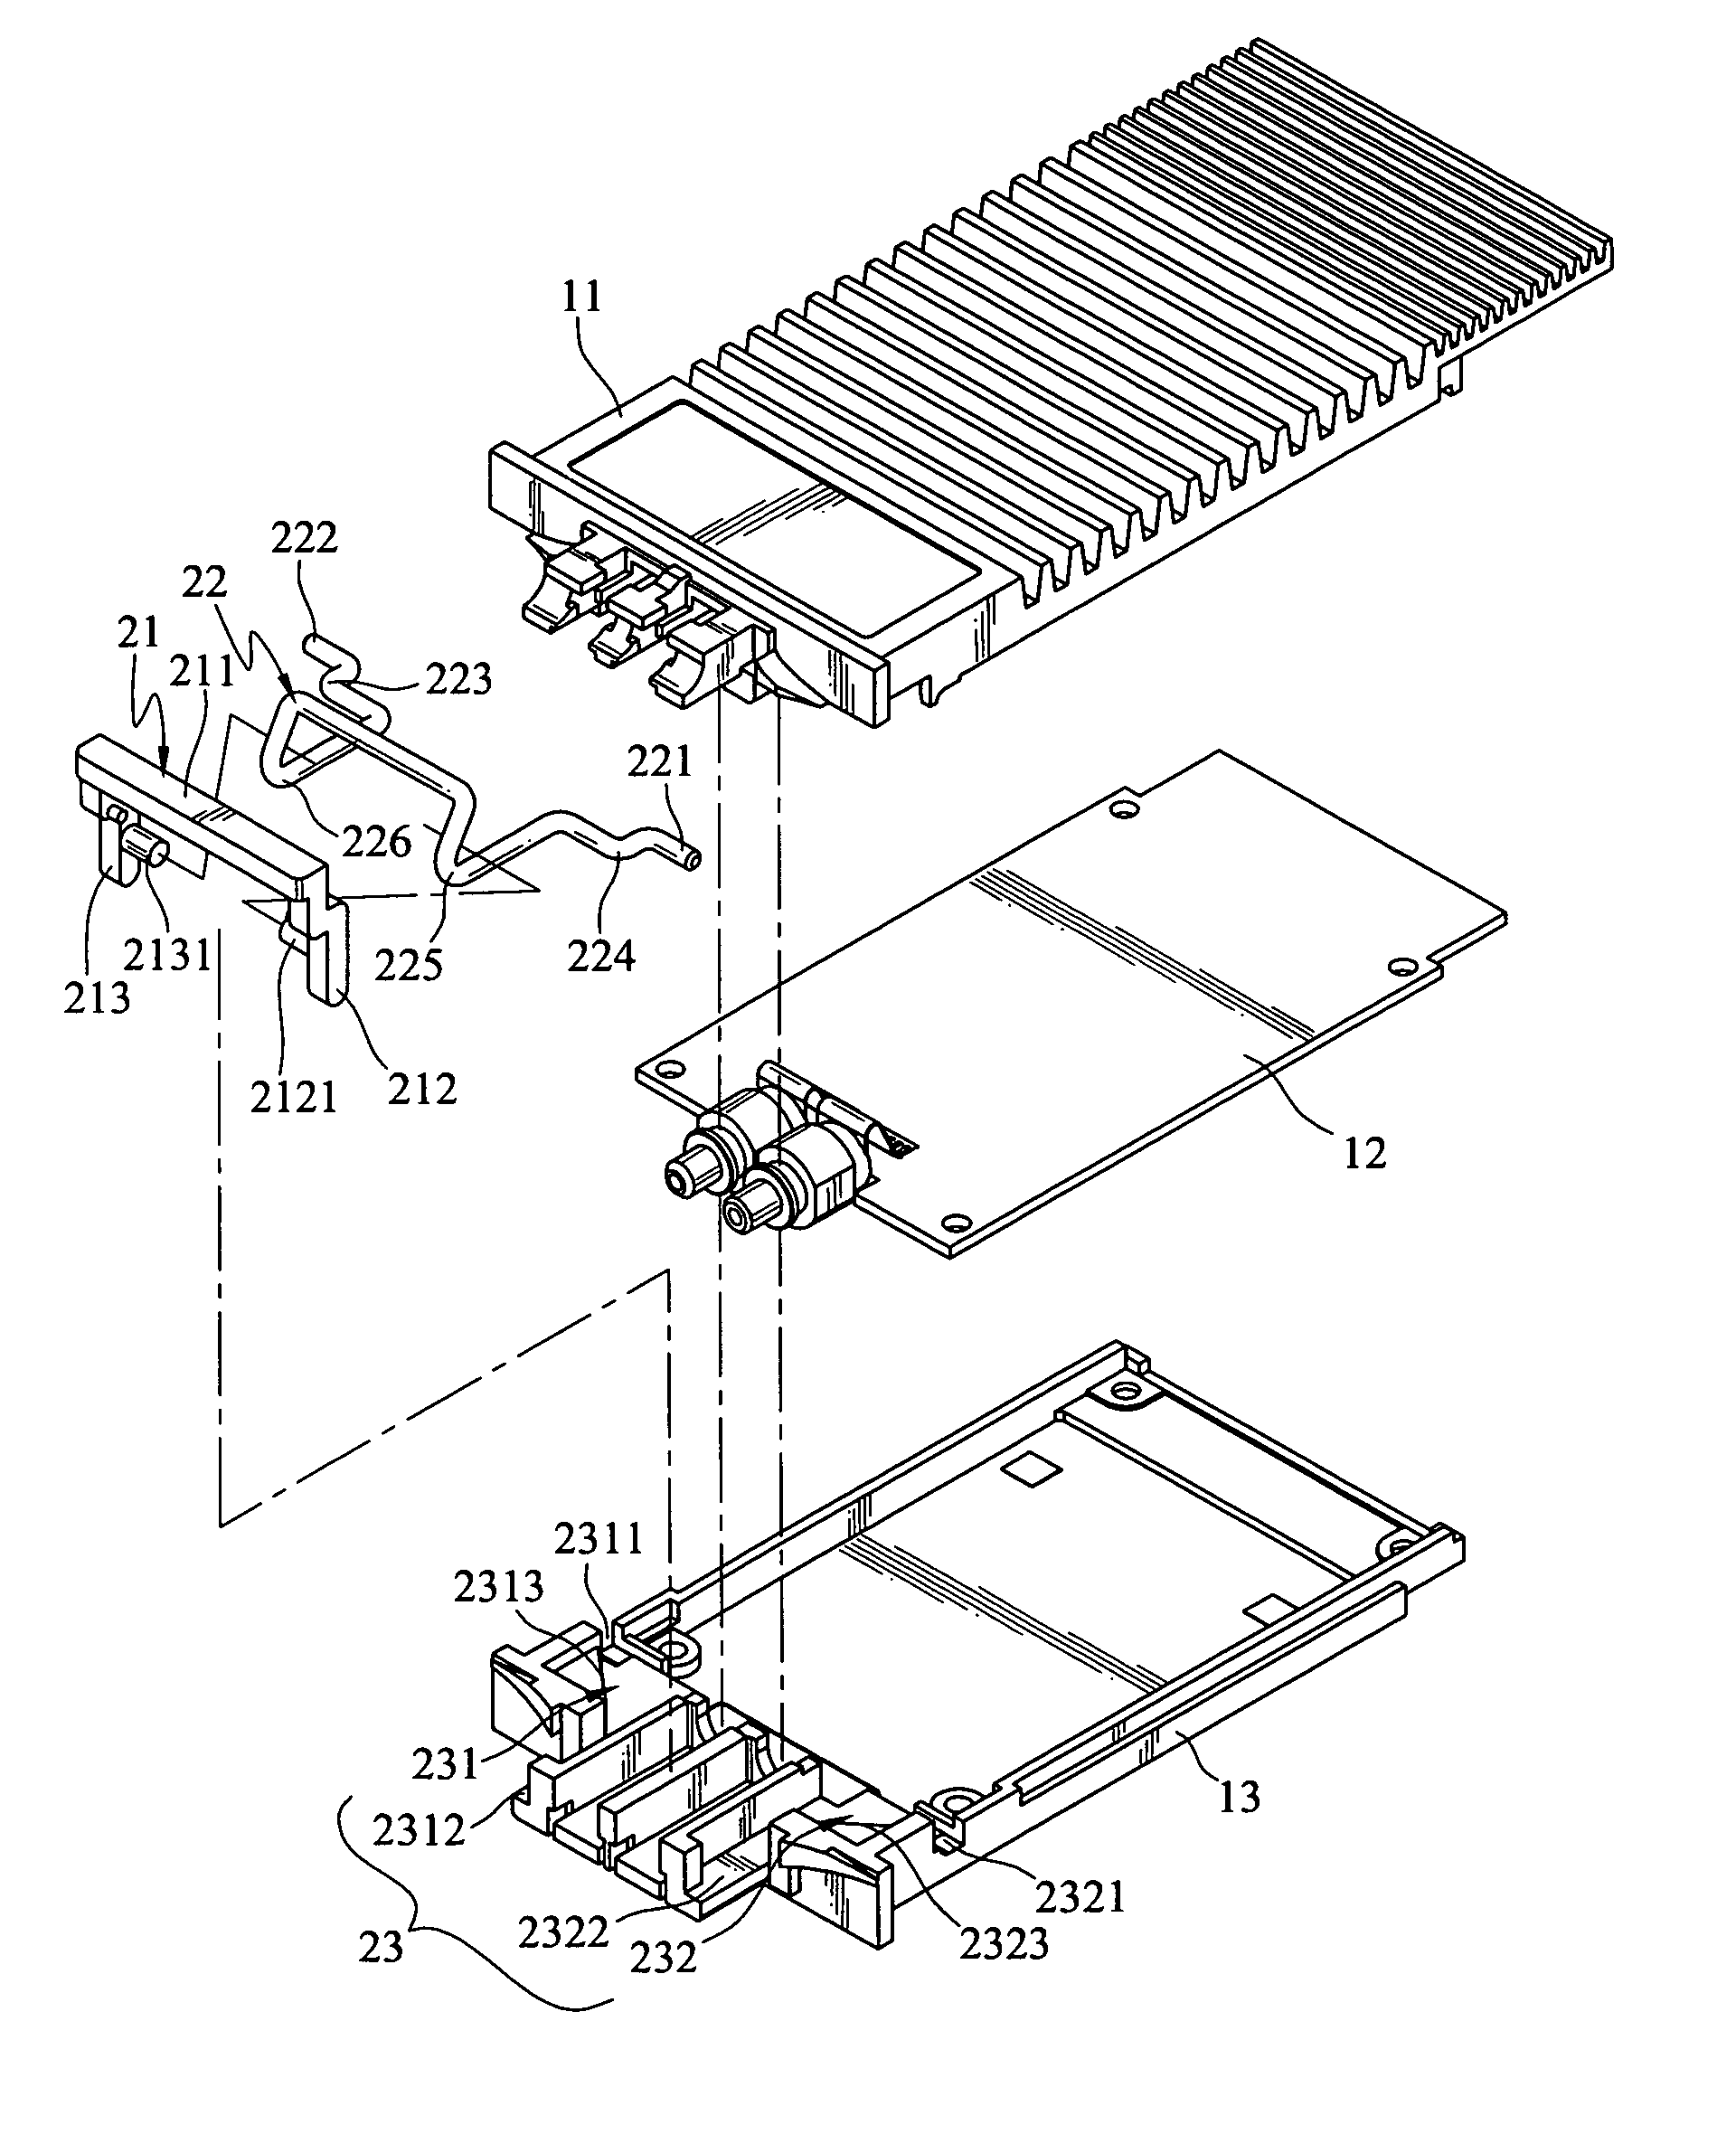 Extending latch mechanism for a pluggable optical module